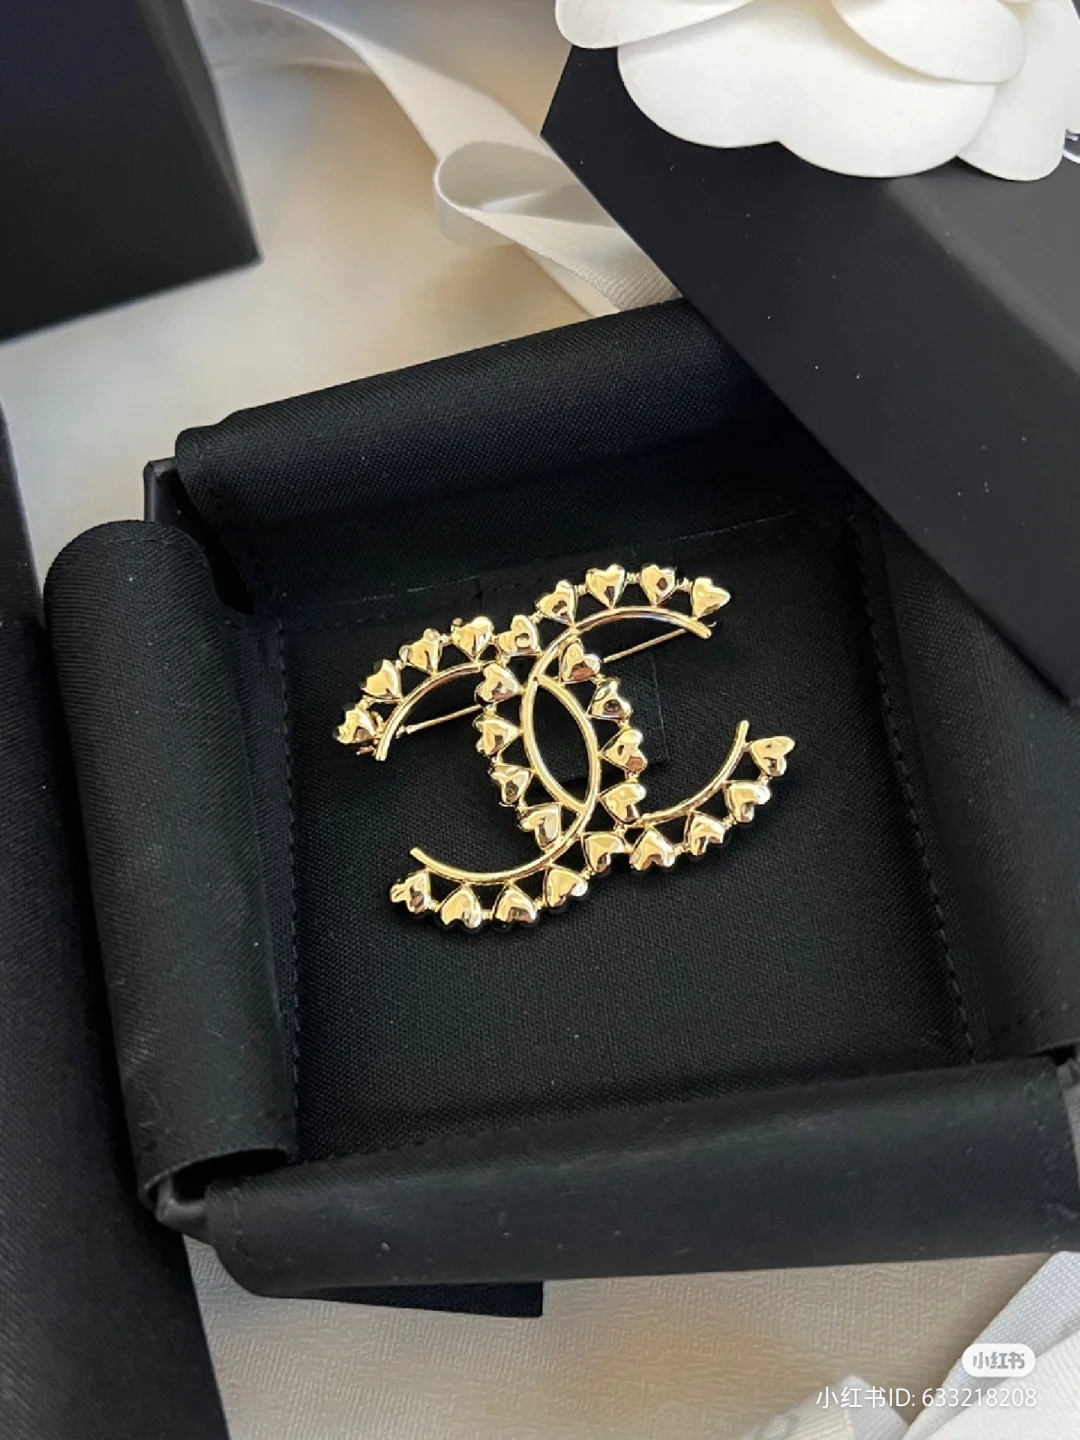 Chanel pin brooch